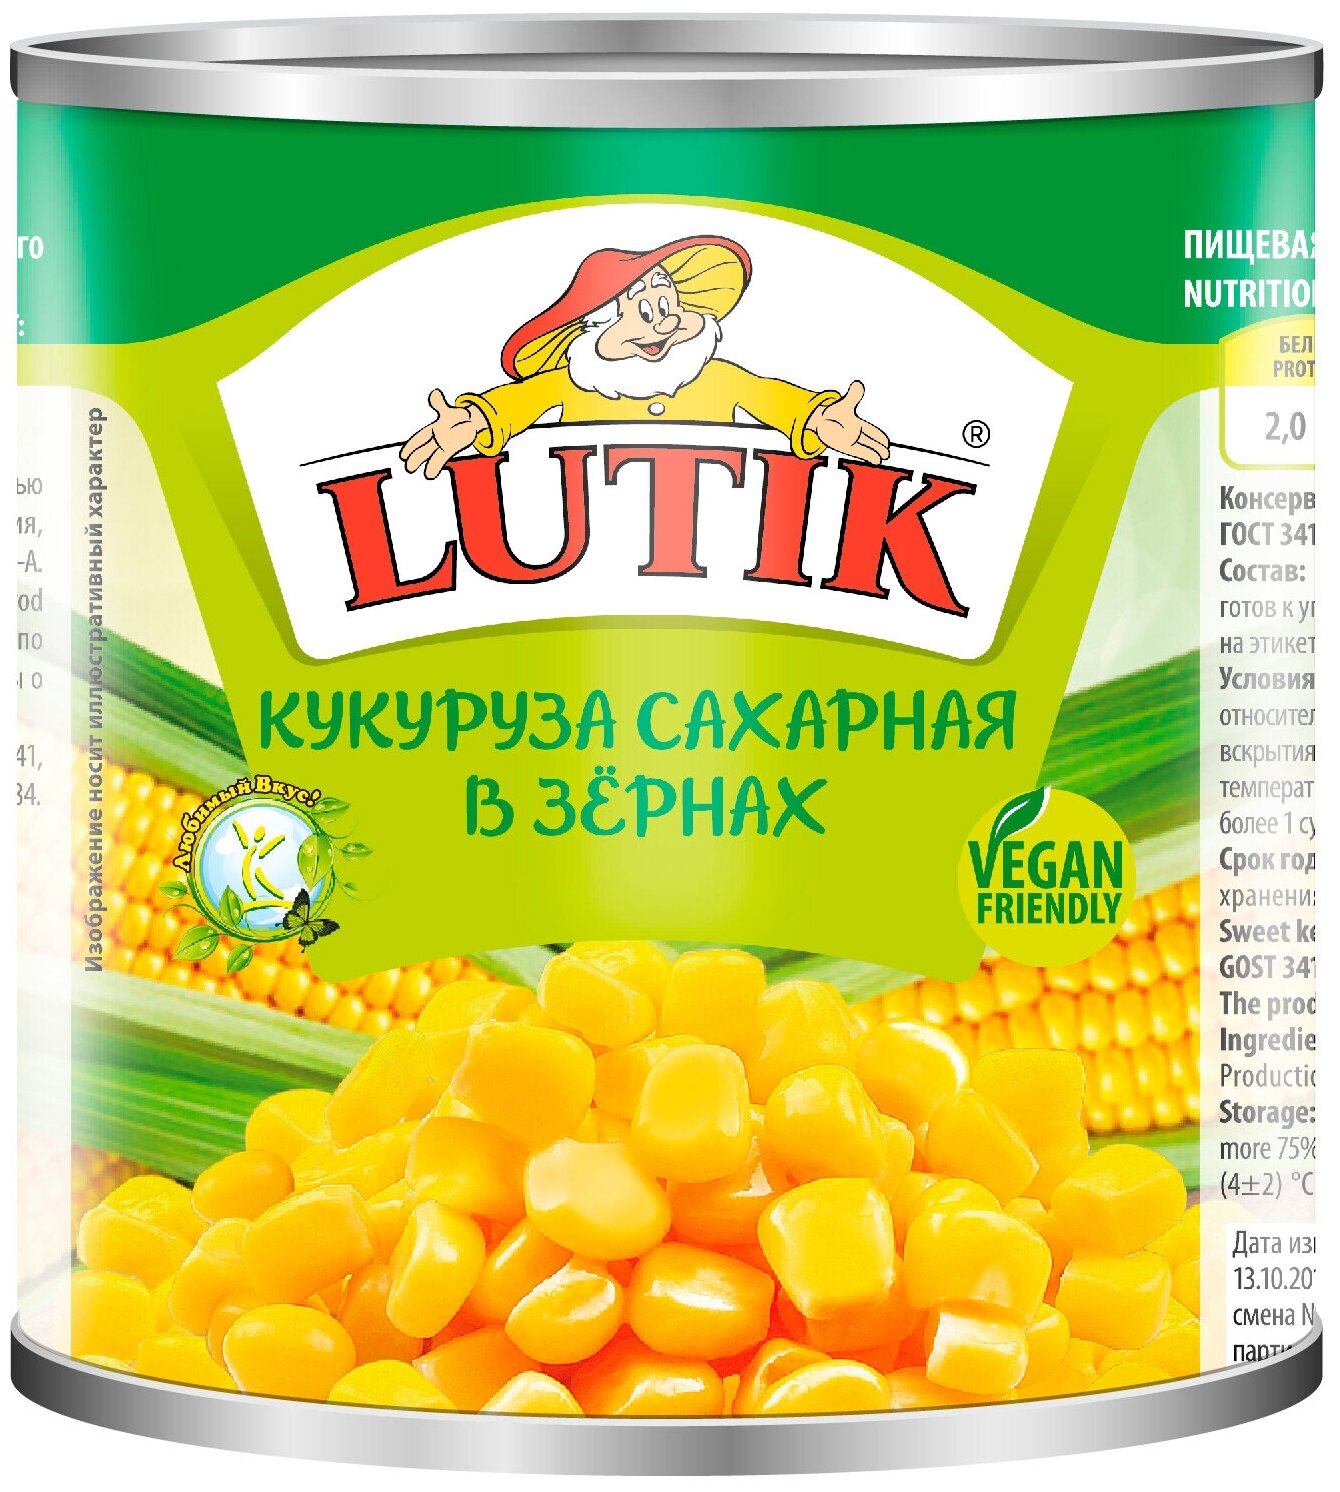 Кукуруза Lutik сахарная в зернах консервированная, 3100мл